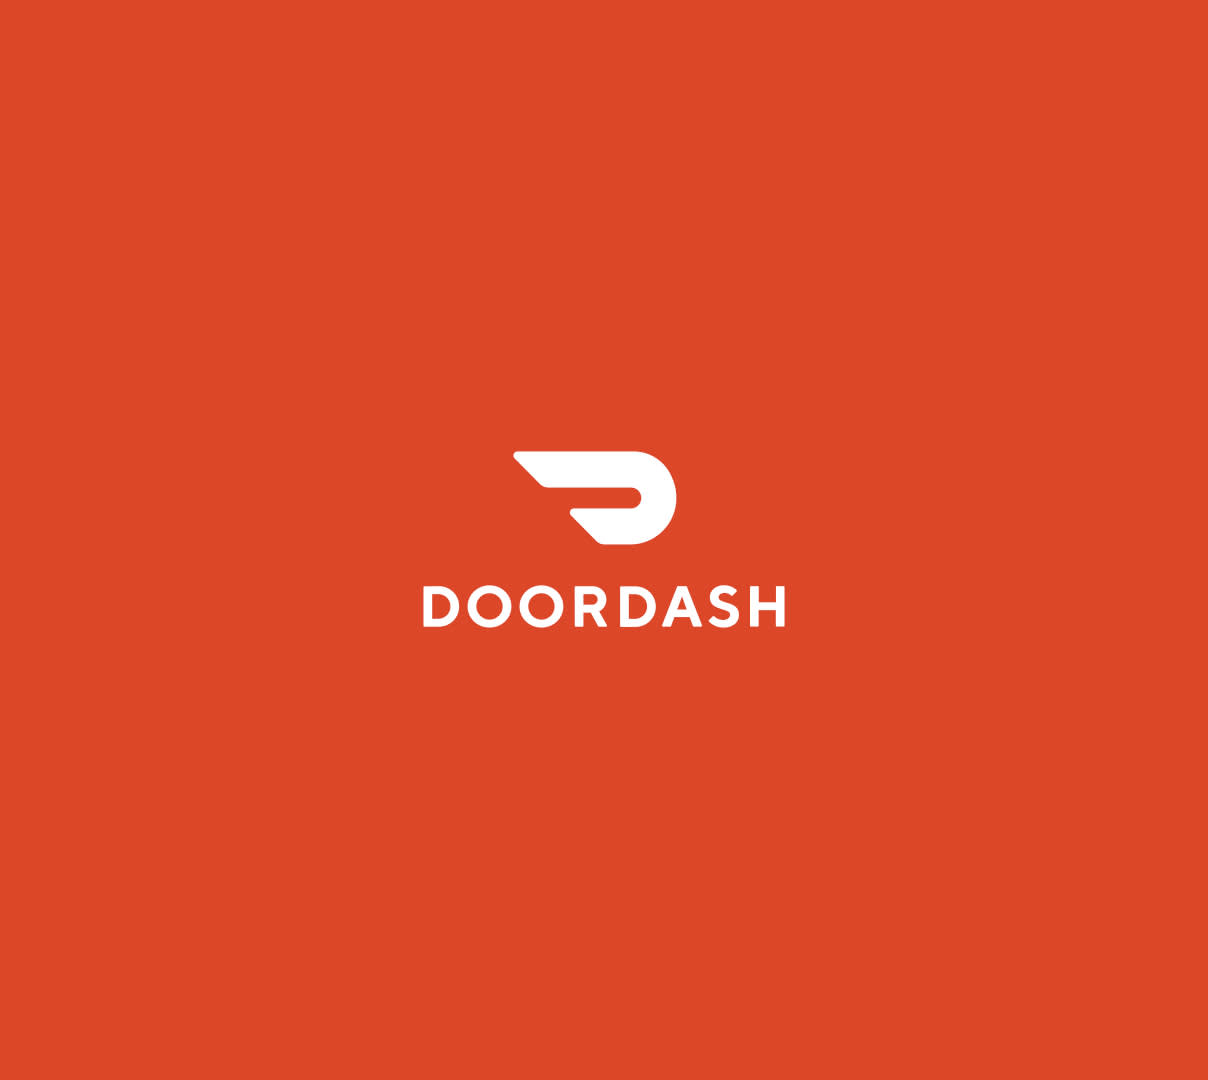 doordash placeholder logo background